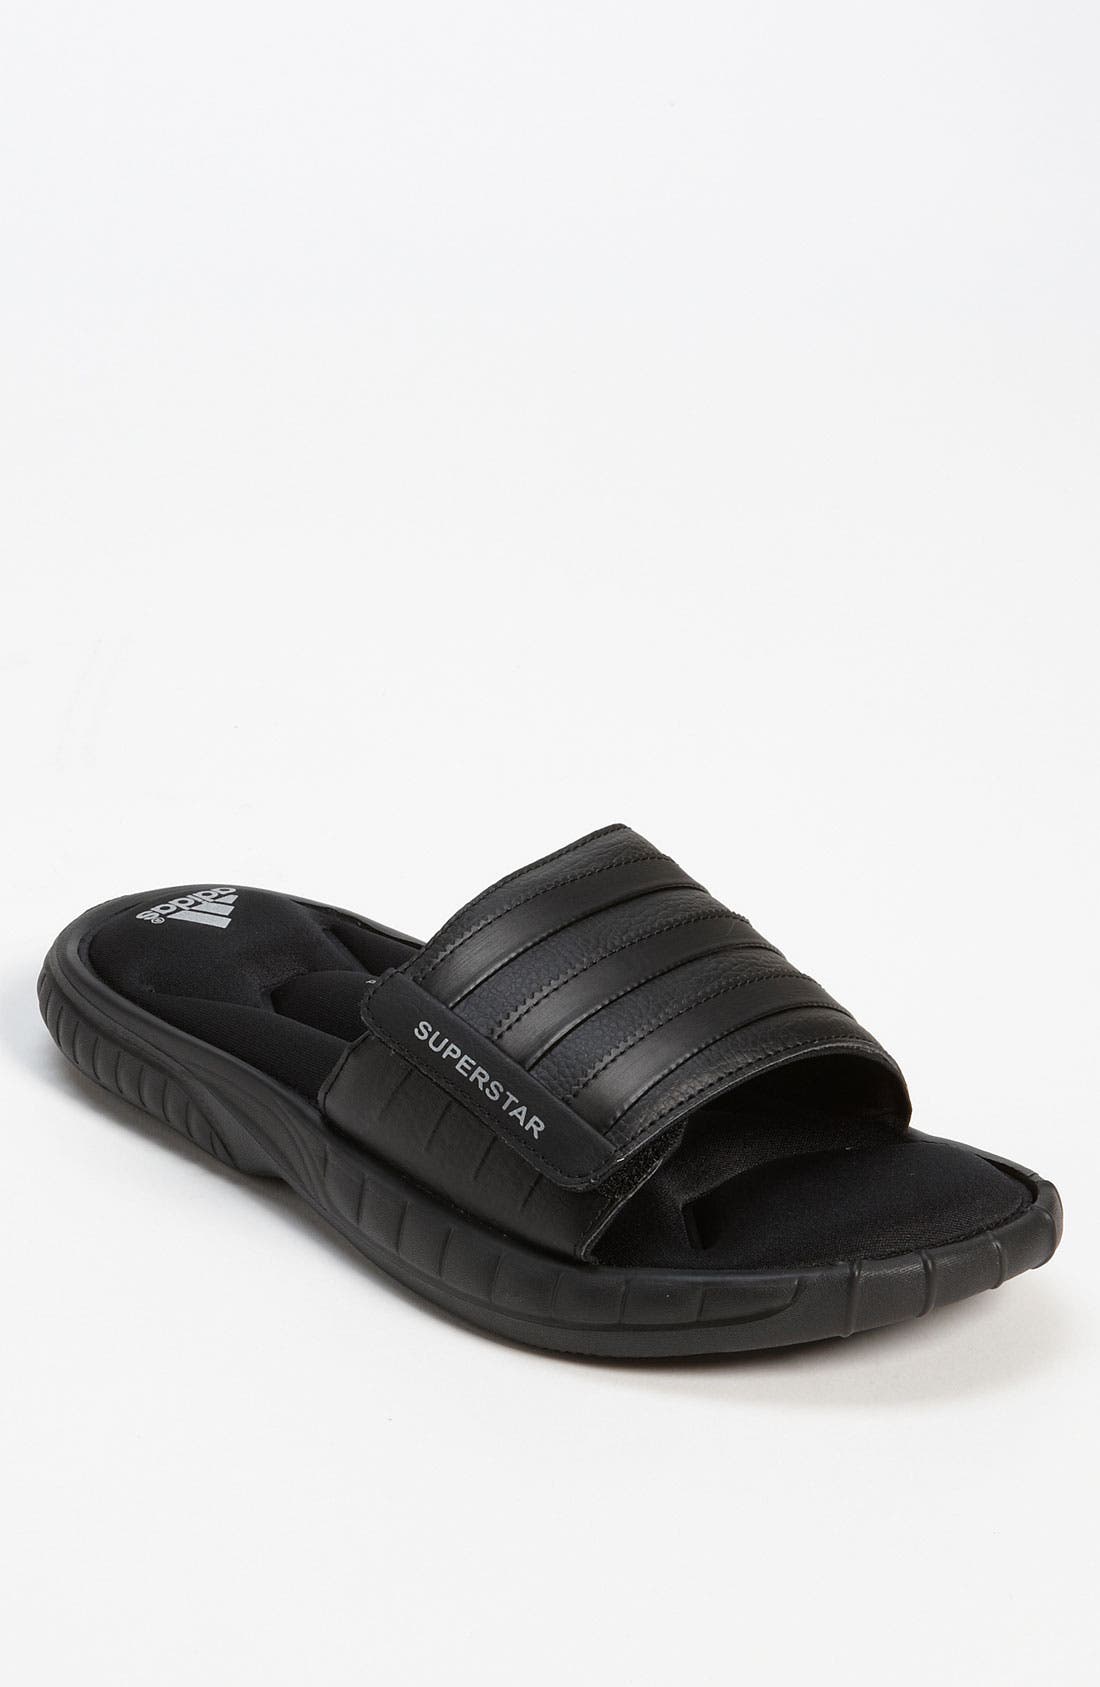 adidas superstar sandals black